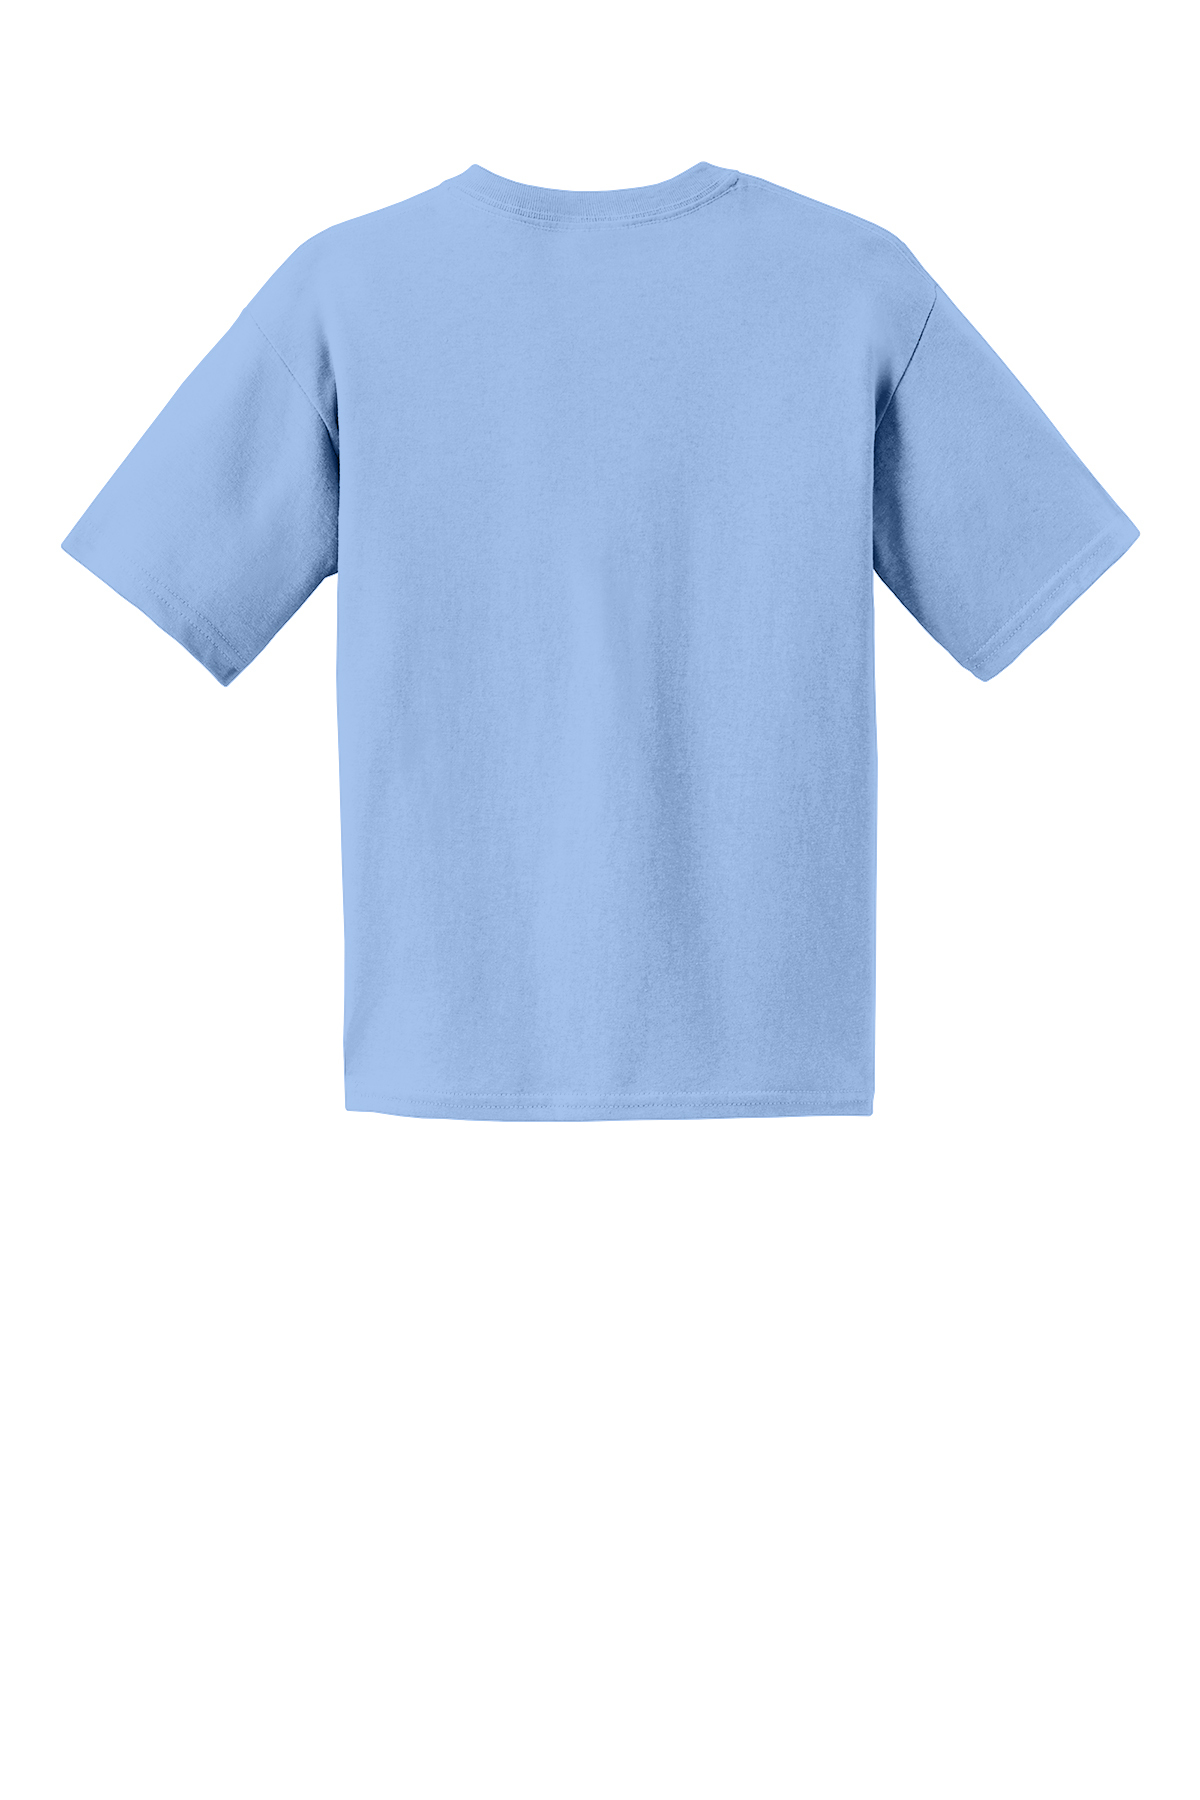 Gildan Youth Ultra Cotton 100% SanMar | Product Cotton T-Shirt US 